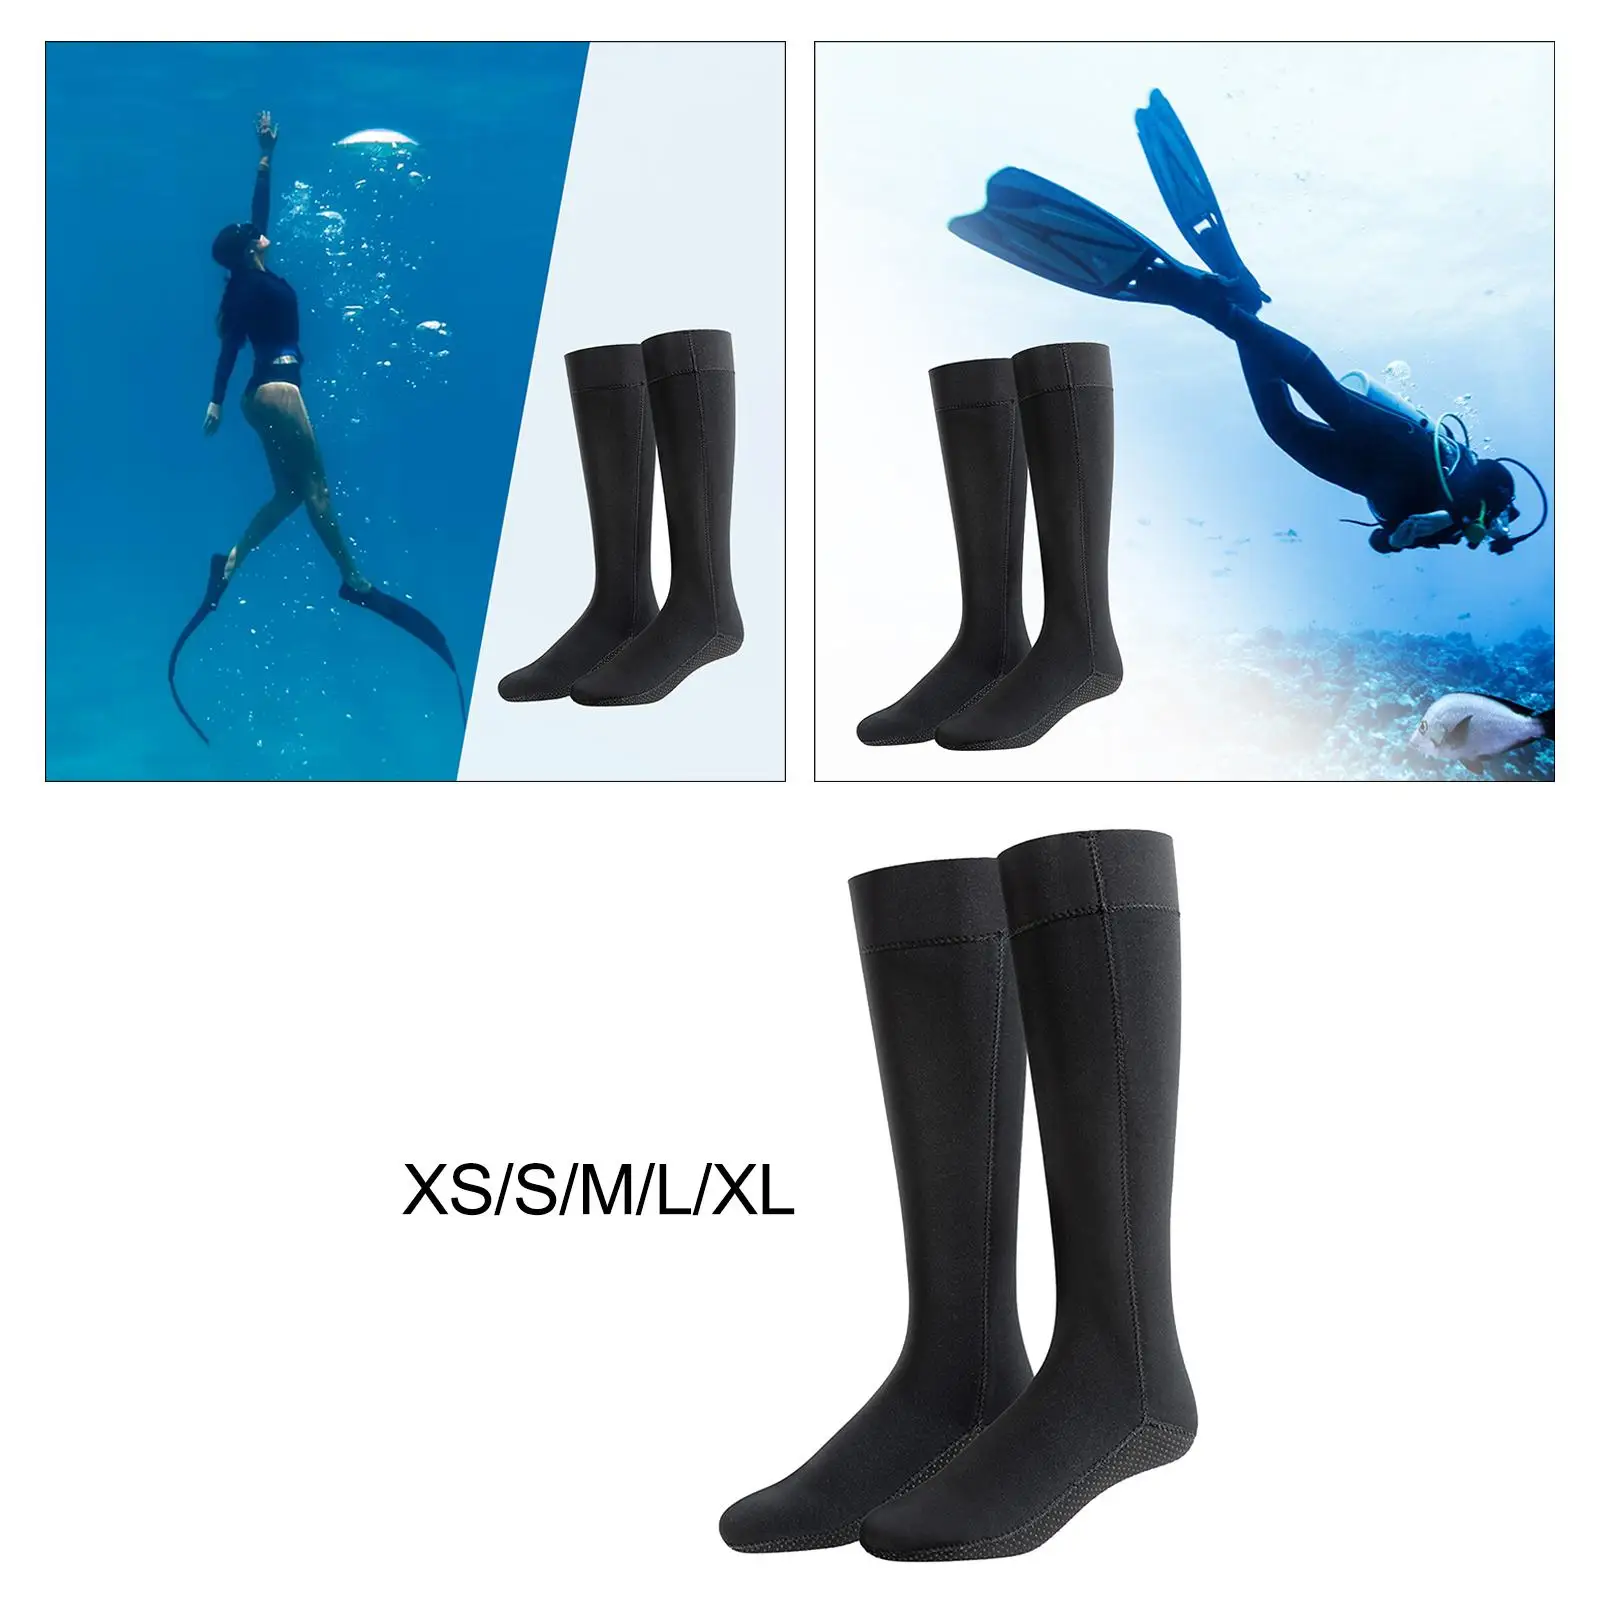 Scuba Diving Socks Water Resistant Thermal Surfing Sock Water Socks for Surfing Water Sports Sailing Kayaking Outdoor Activities